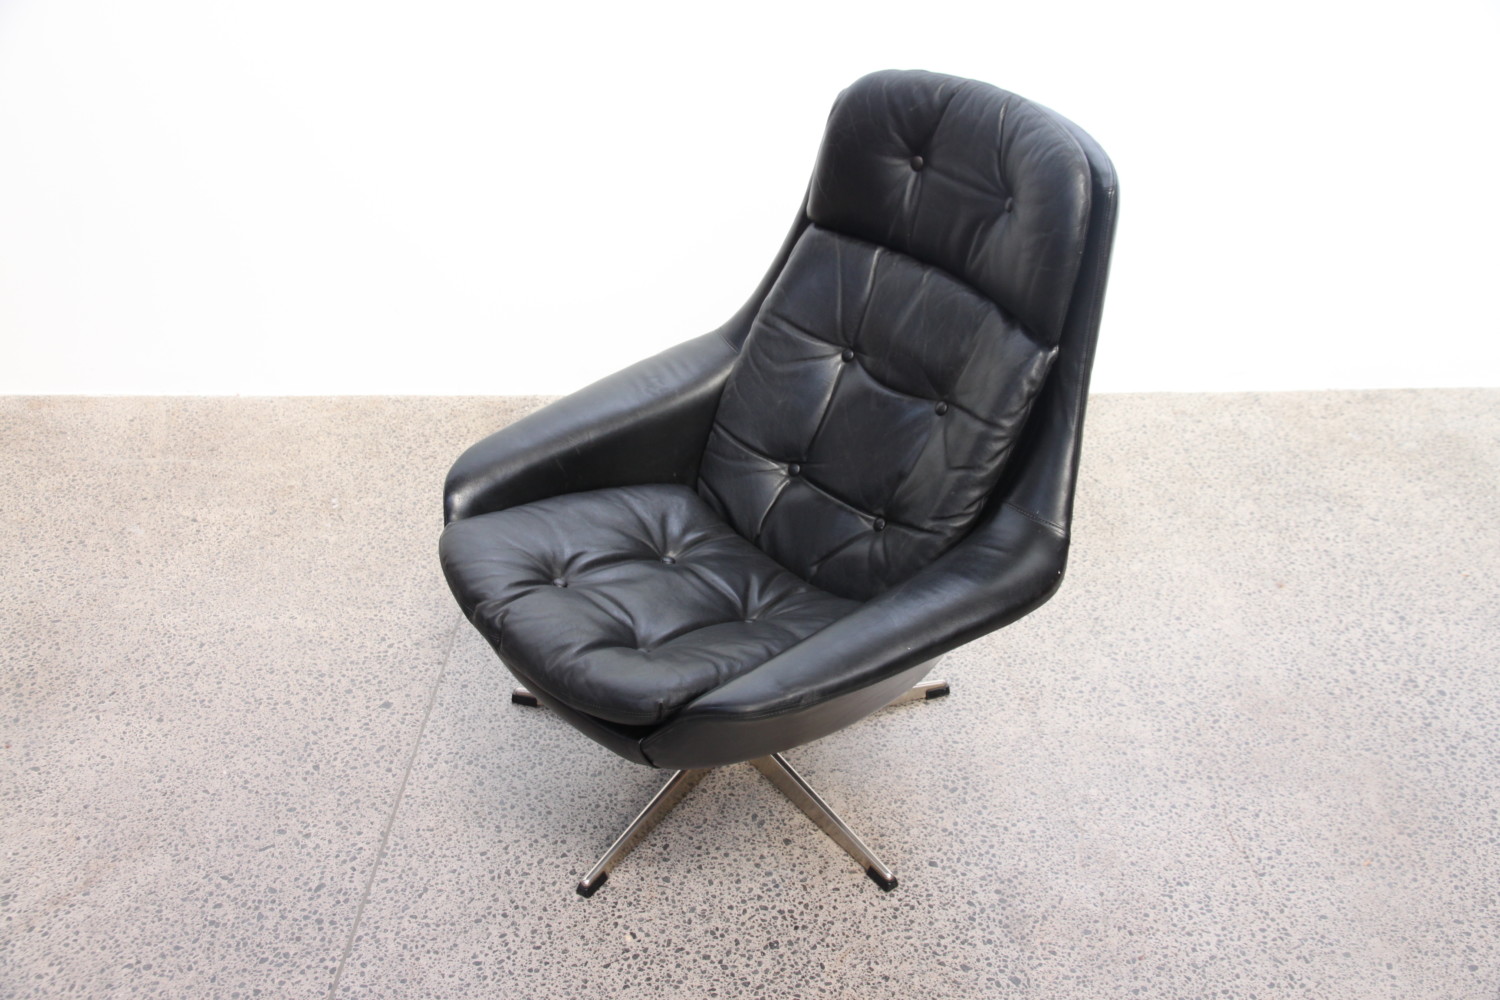 Black Swivel Chair